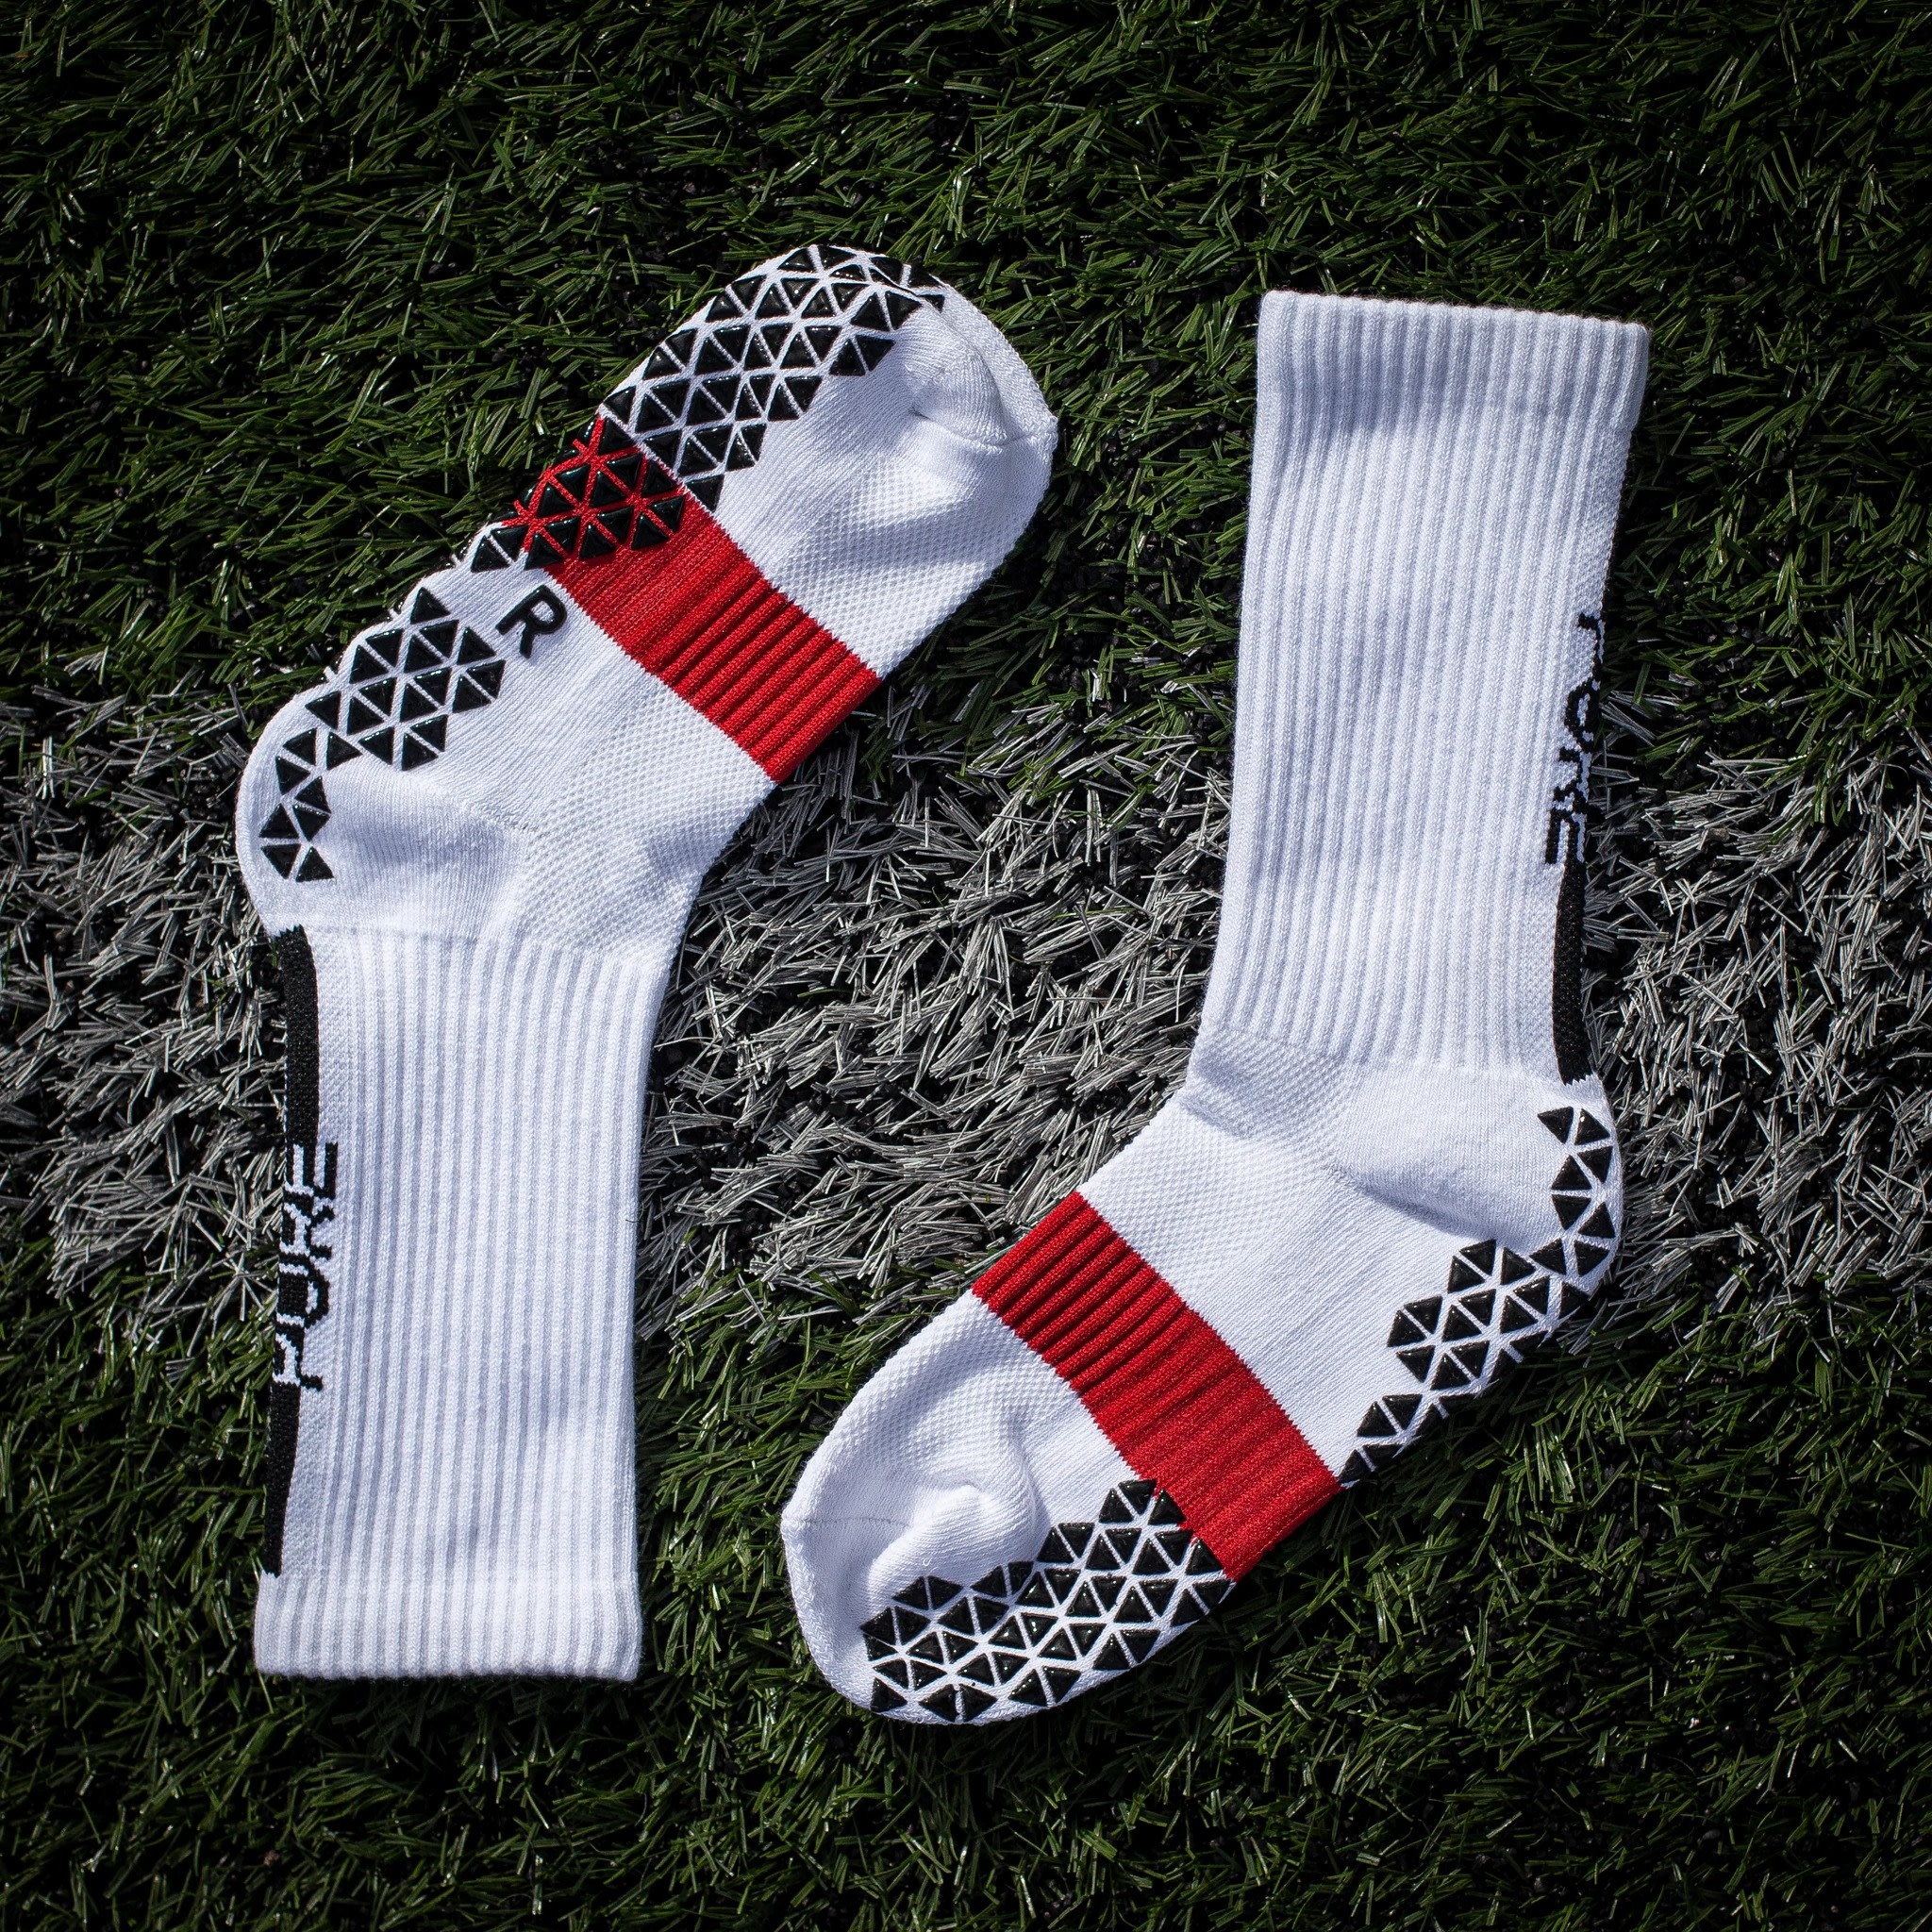 Pure Grip Socks, My thoughts #soccer #gripsocks #truejezussoccer #socc